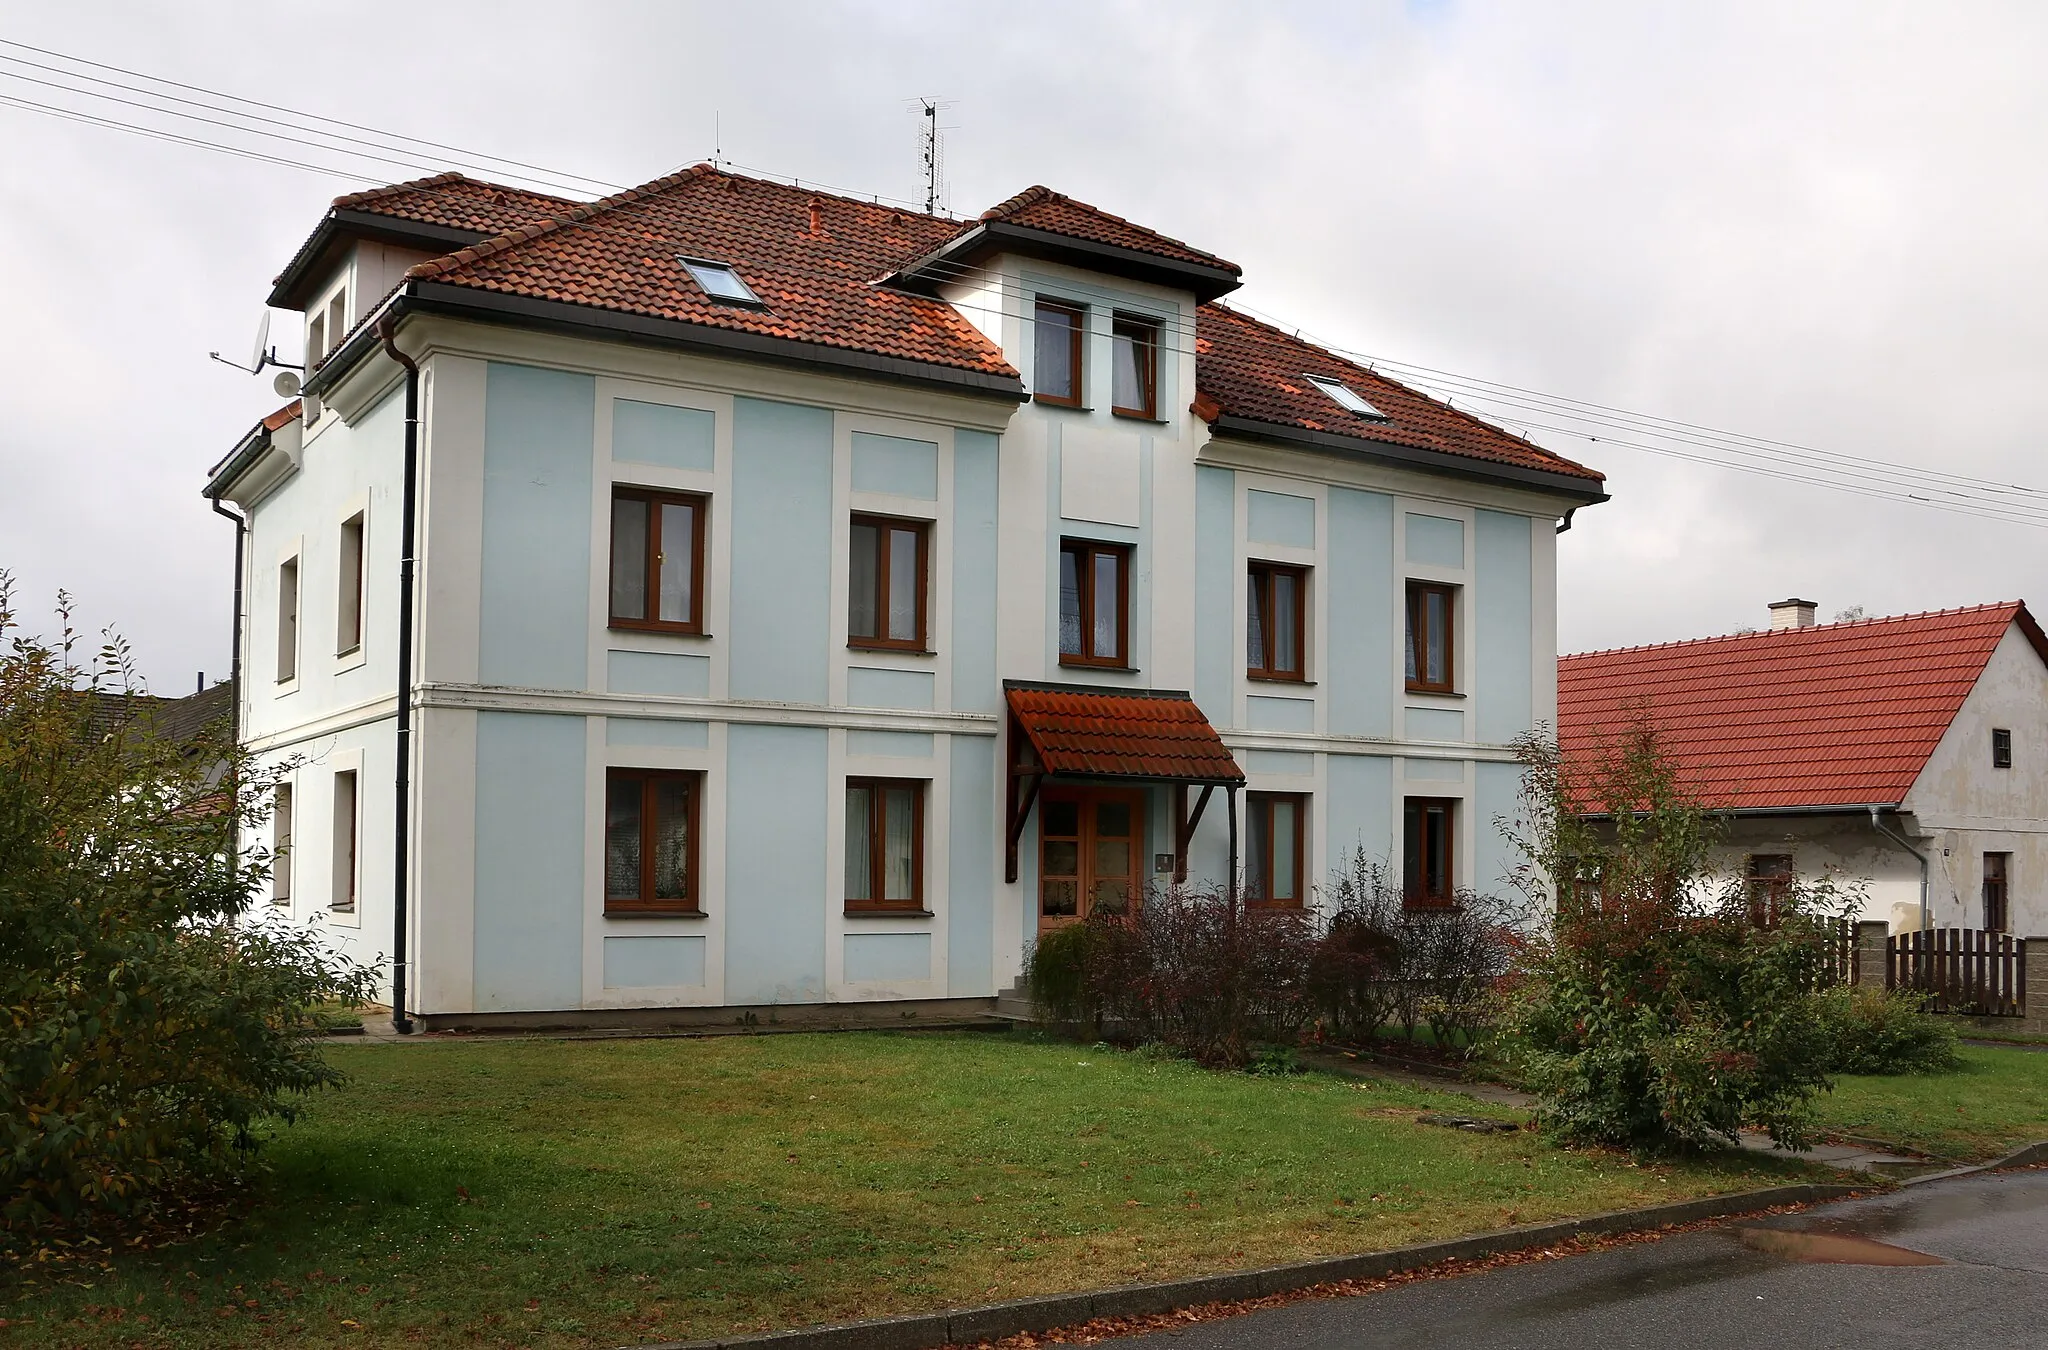 Photo showing: House No 42 in Častrov, Czech Republic.